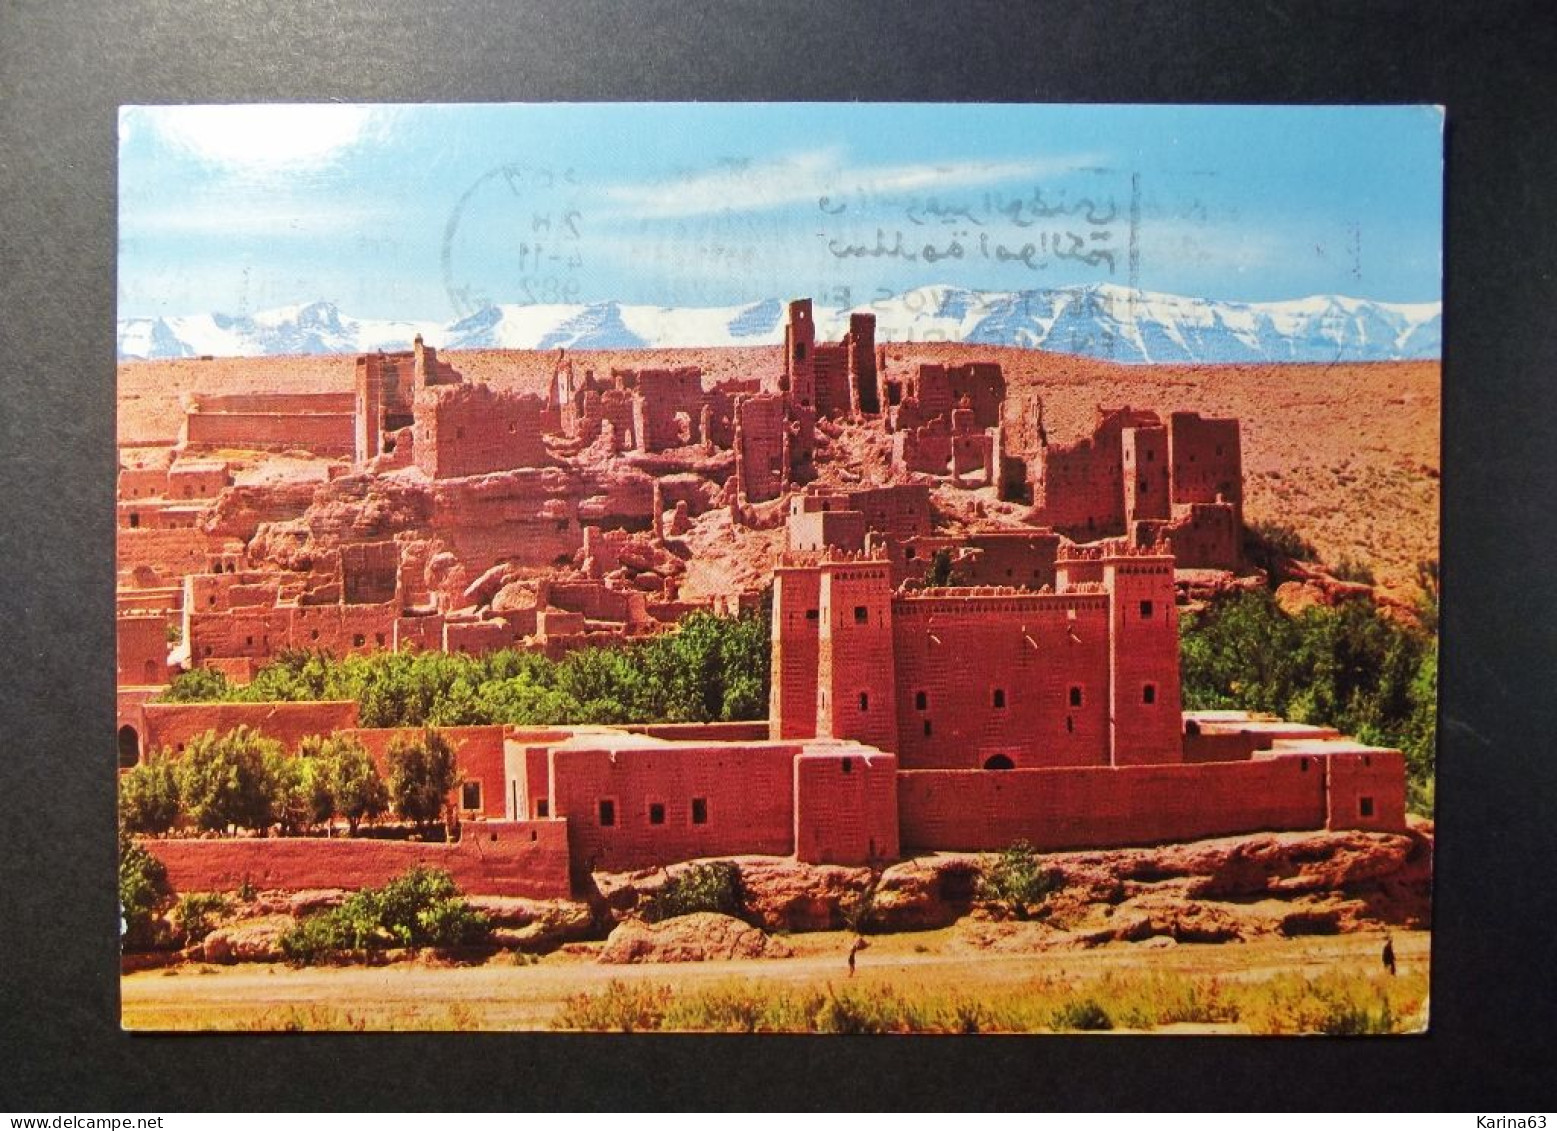 Morocco - Maroc -  Kasbah Et La Chaine De L'Atlas - Mountains - Used Card With Stamp / Timbre - Marrakesh